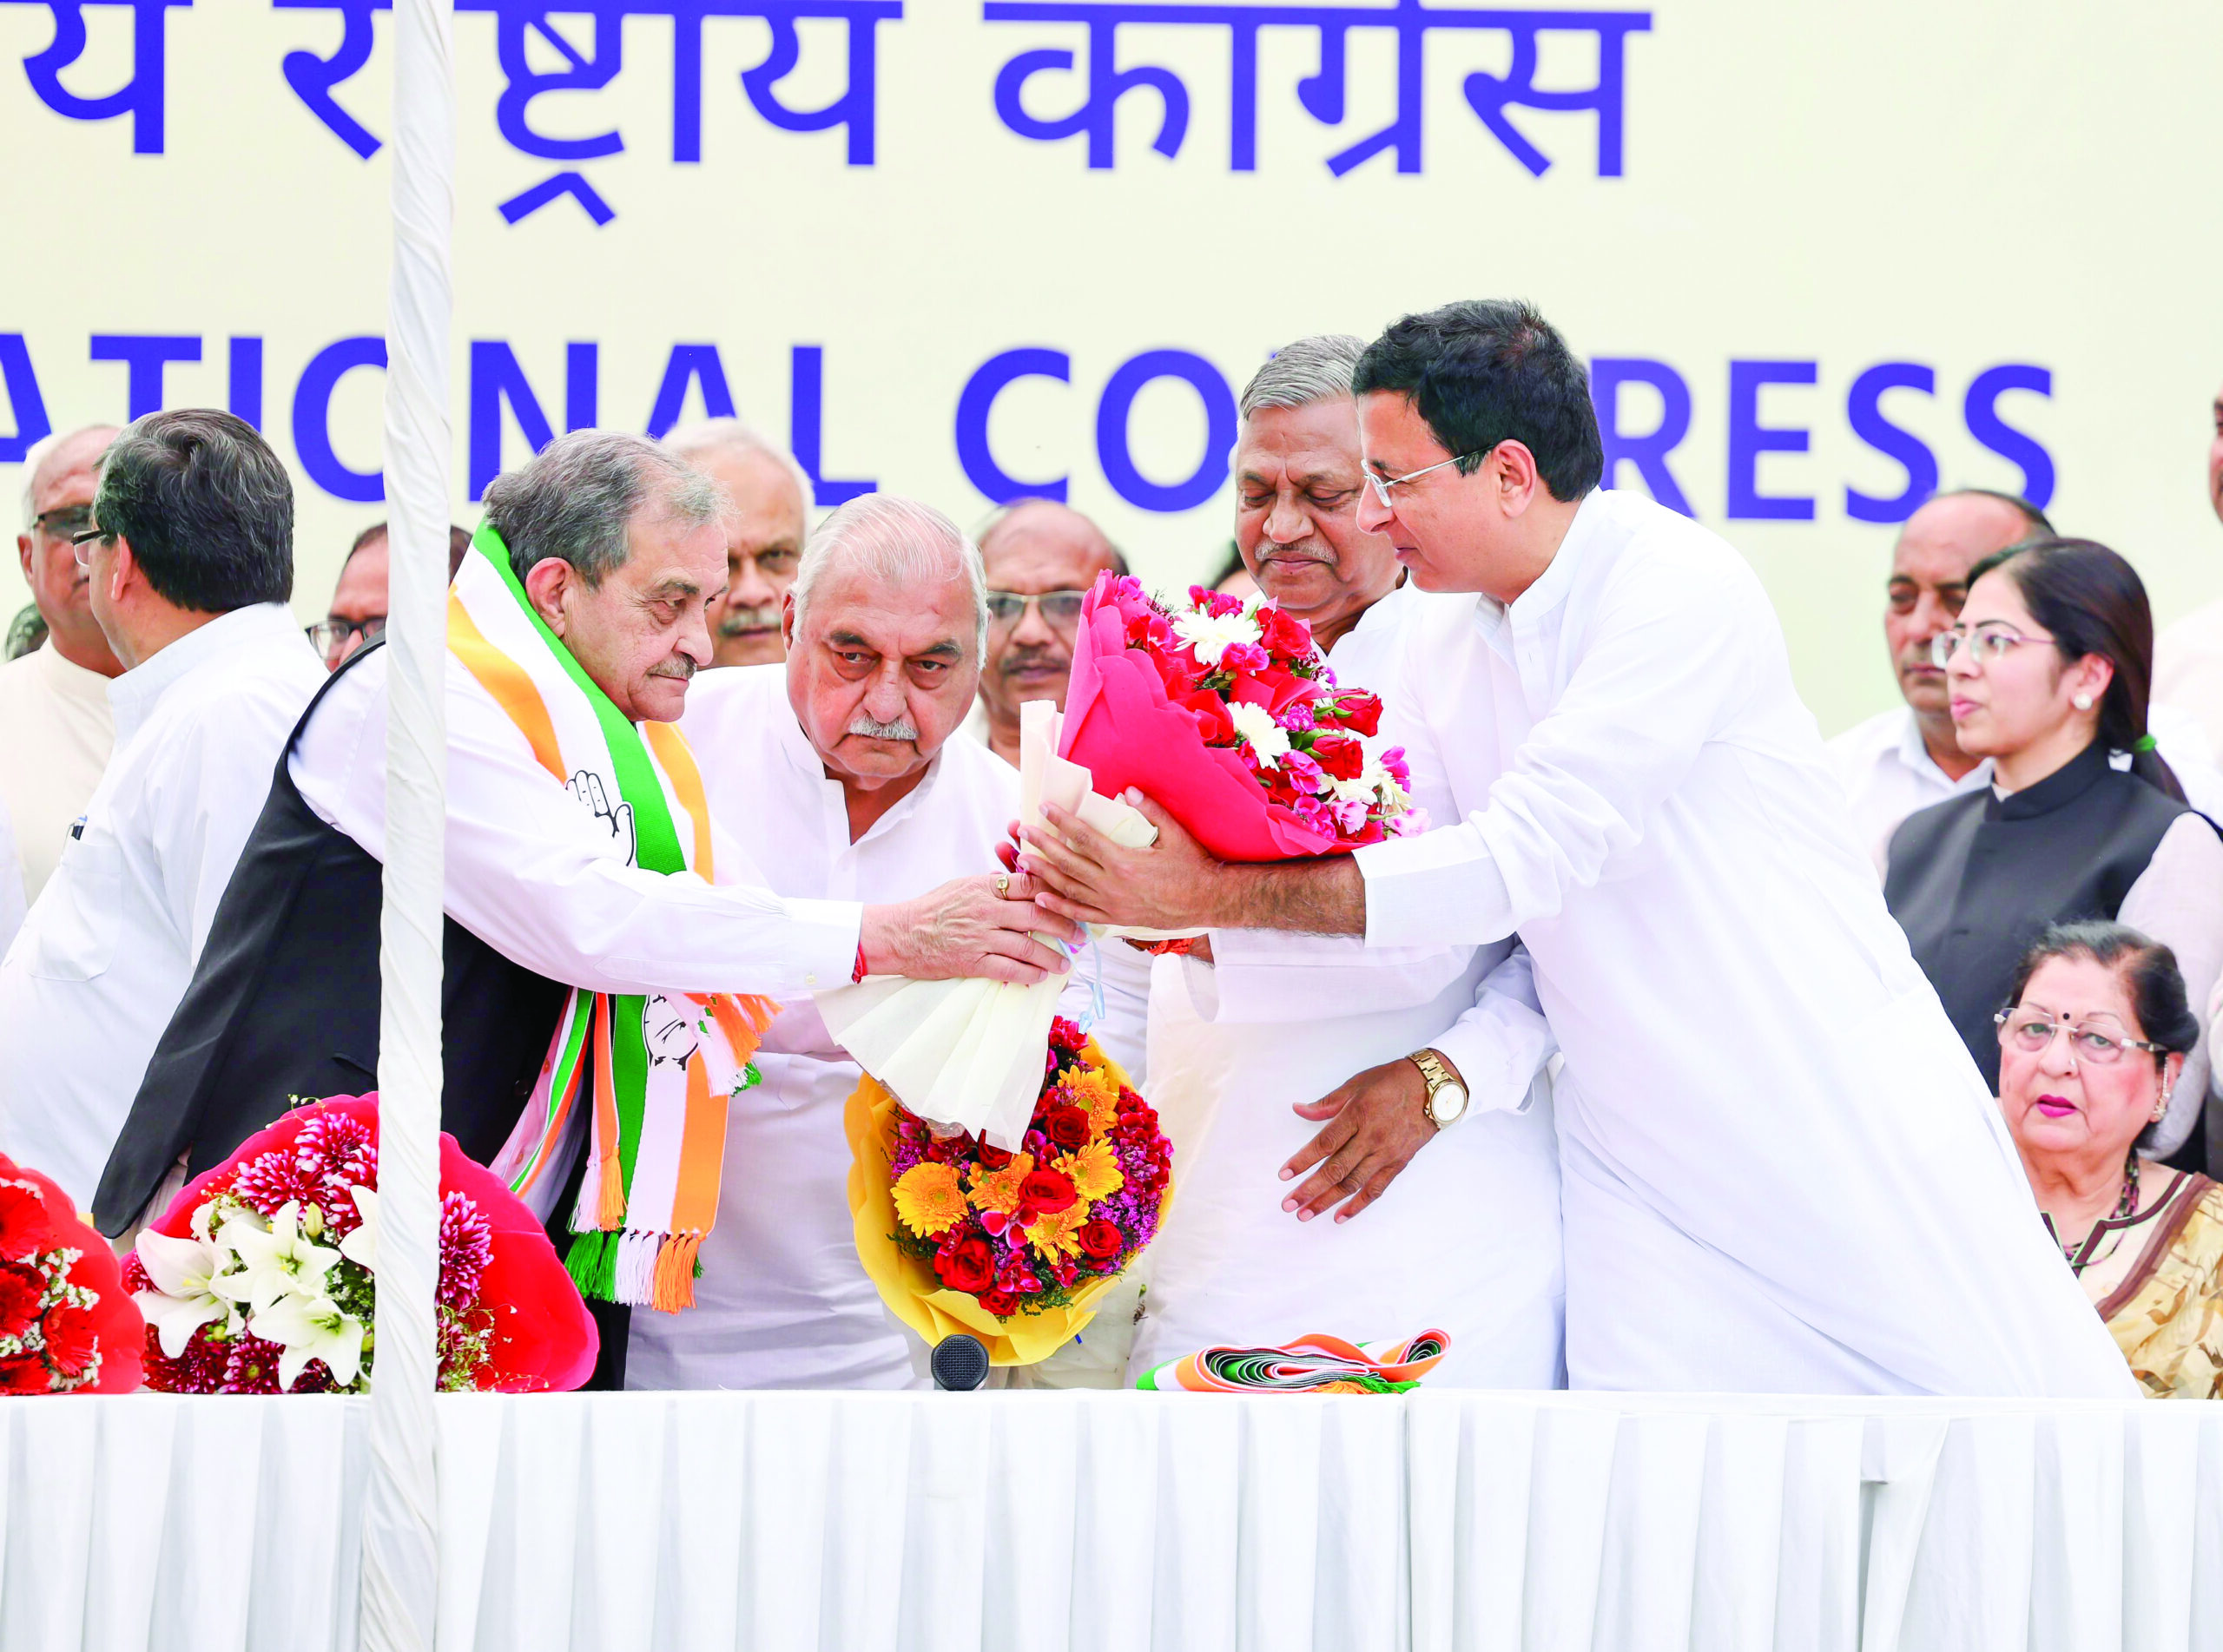 Birender Singh’s Congress joining: both having high hopes for each other